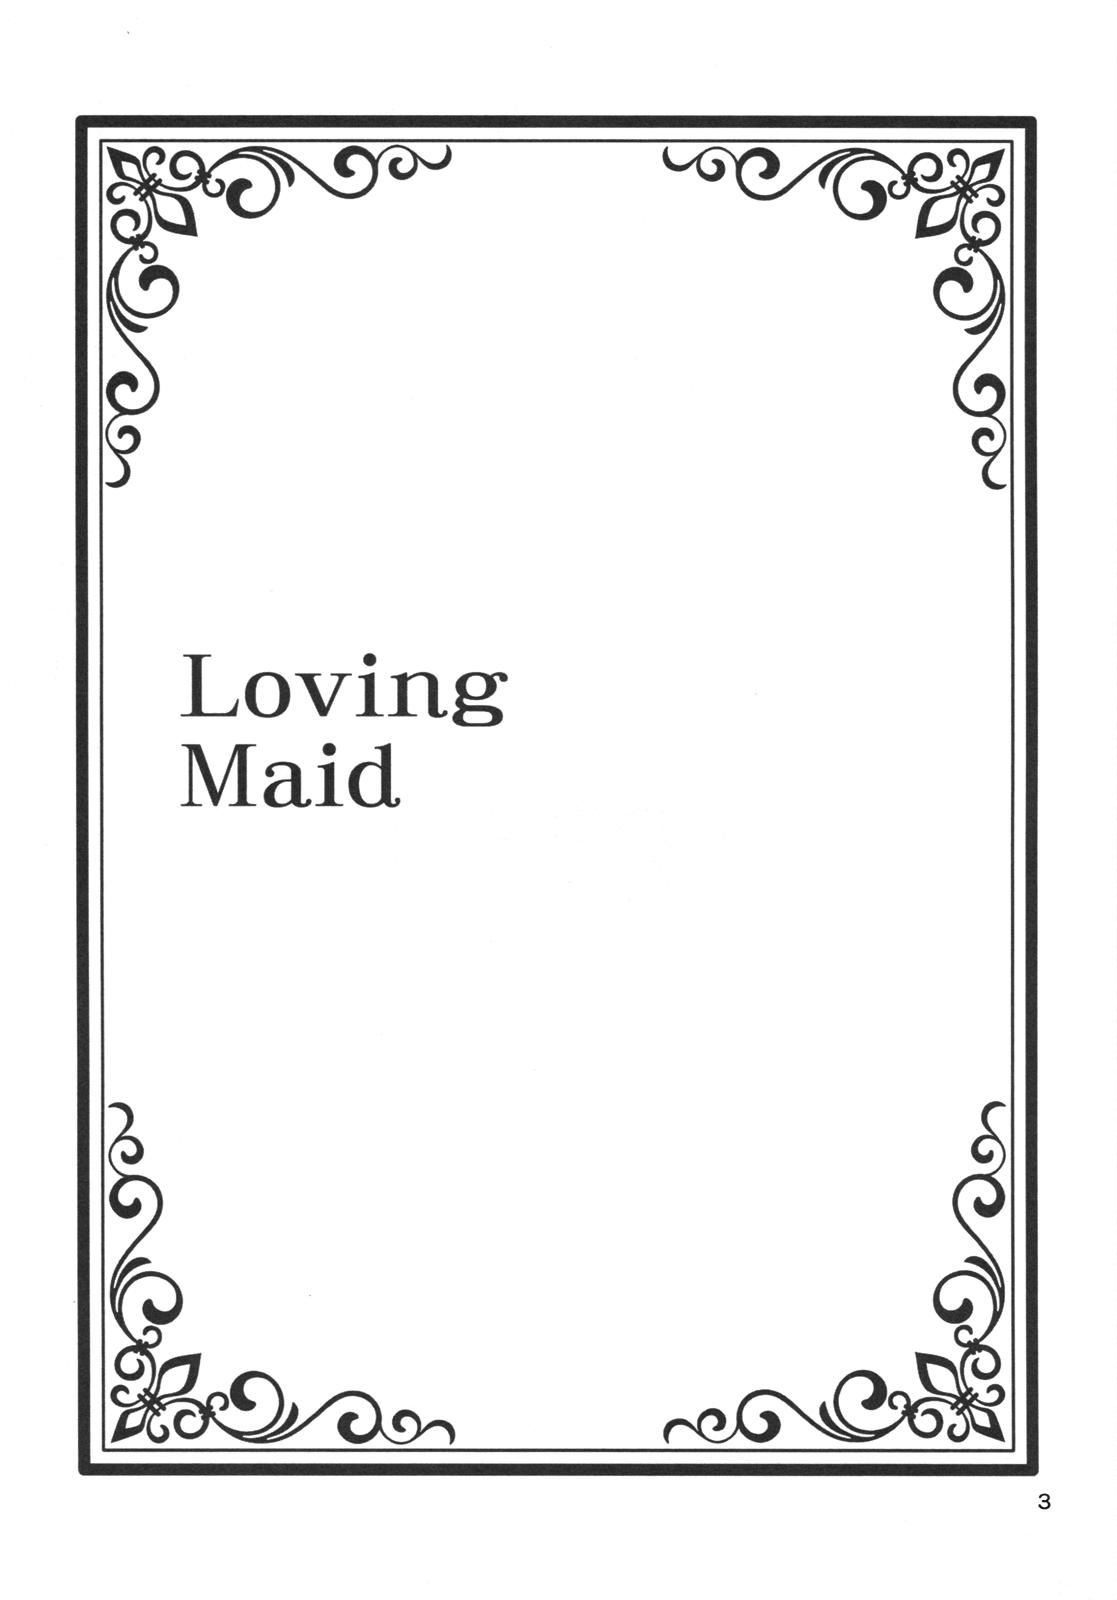 Loving Maid 2